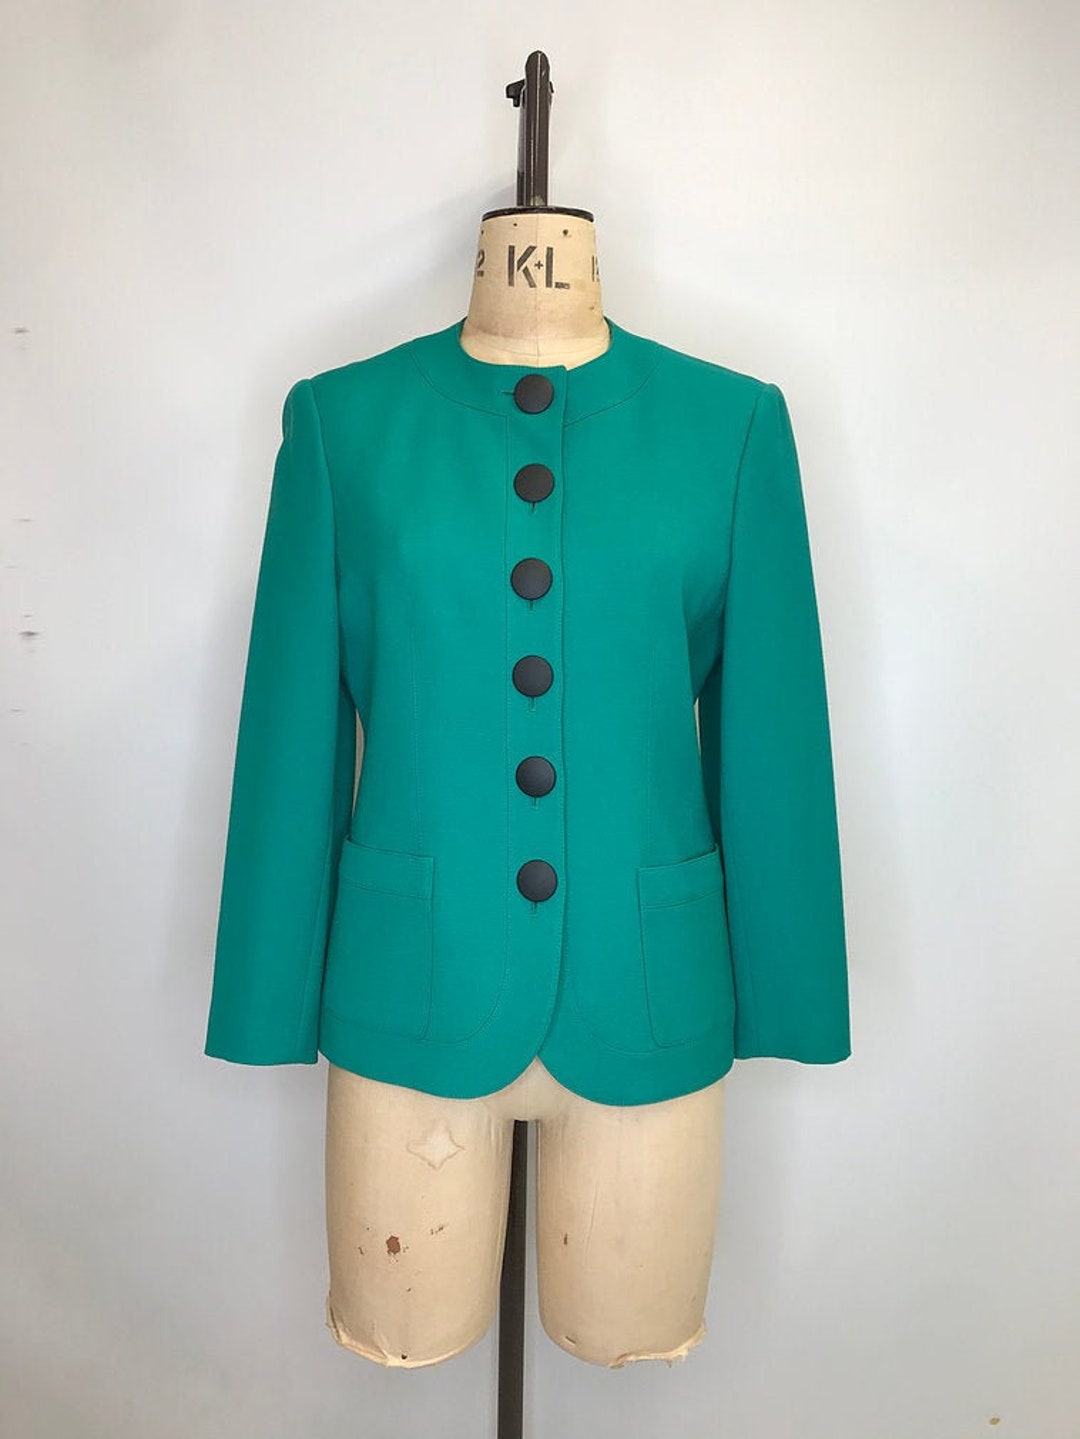 NWT Vintage Louis Feraud Jacket